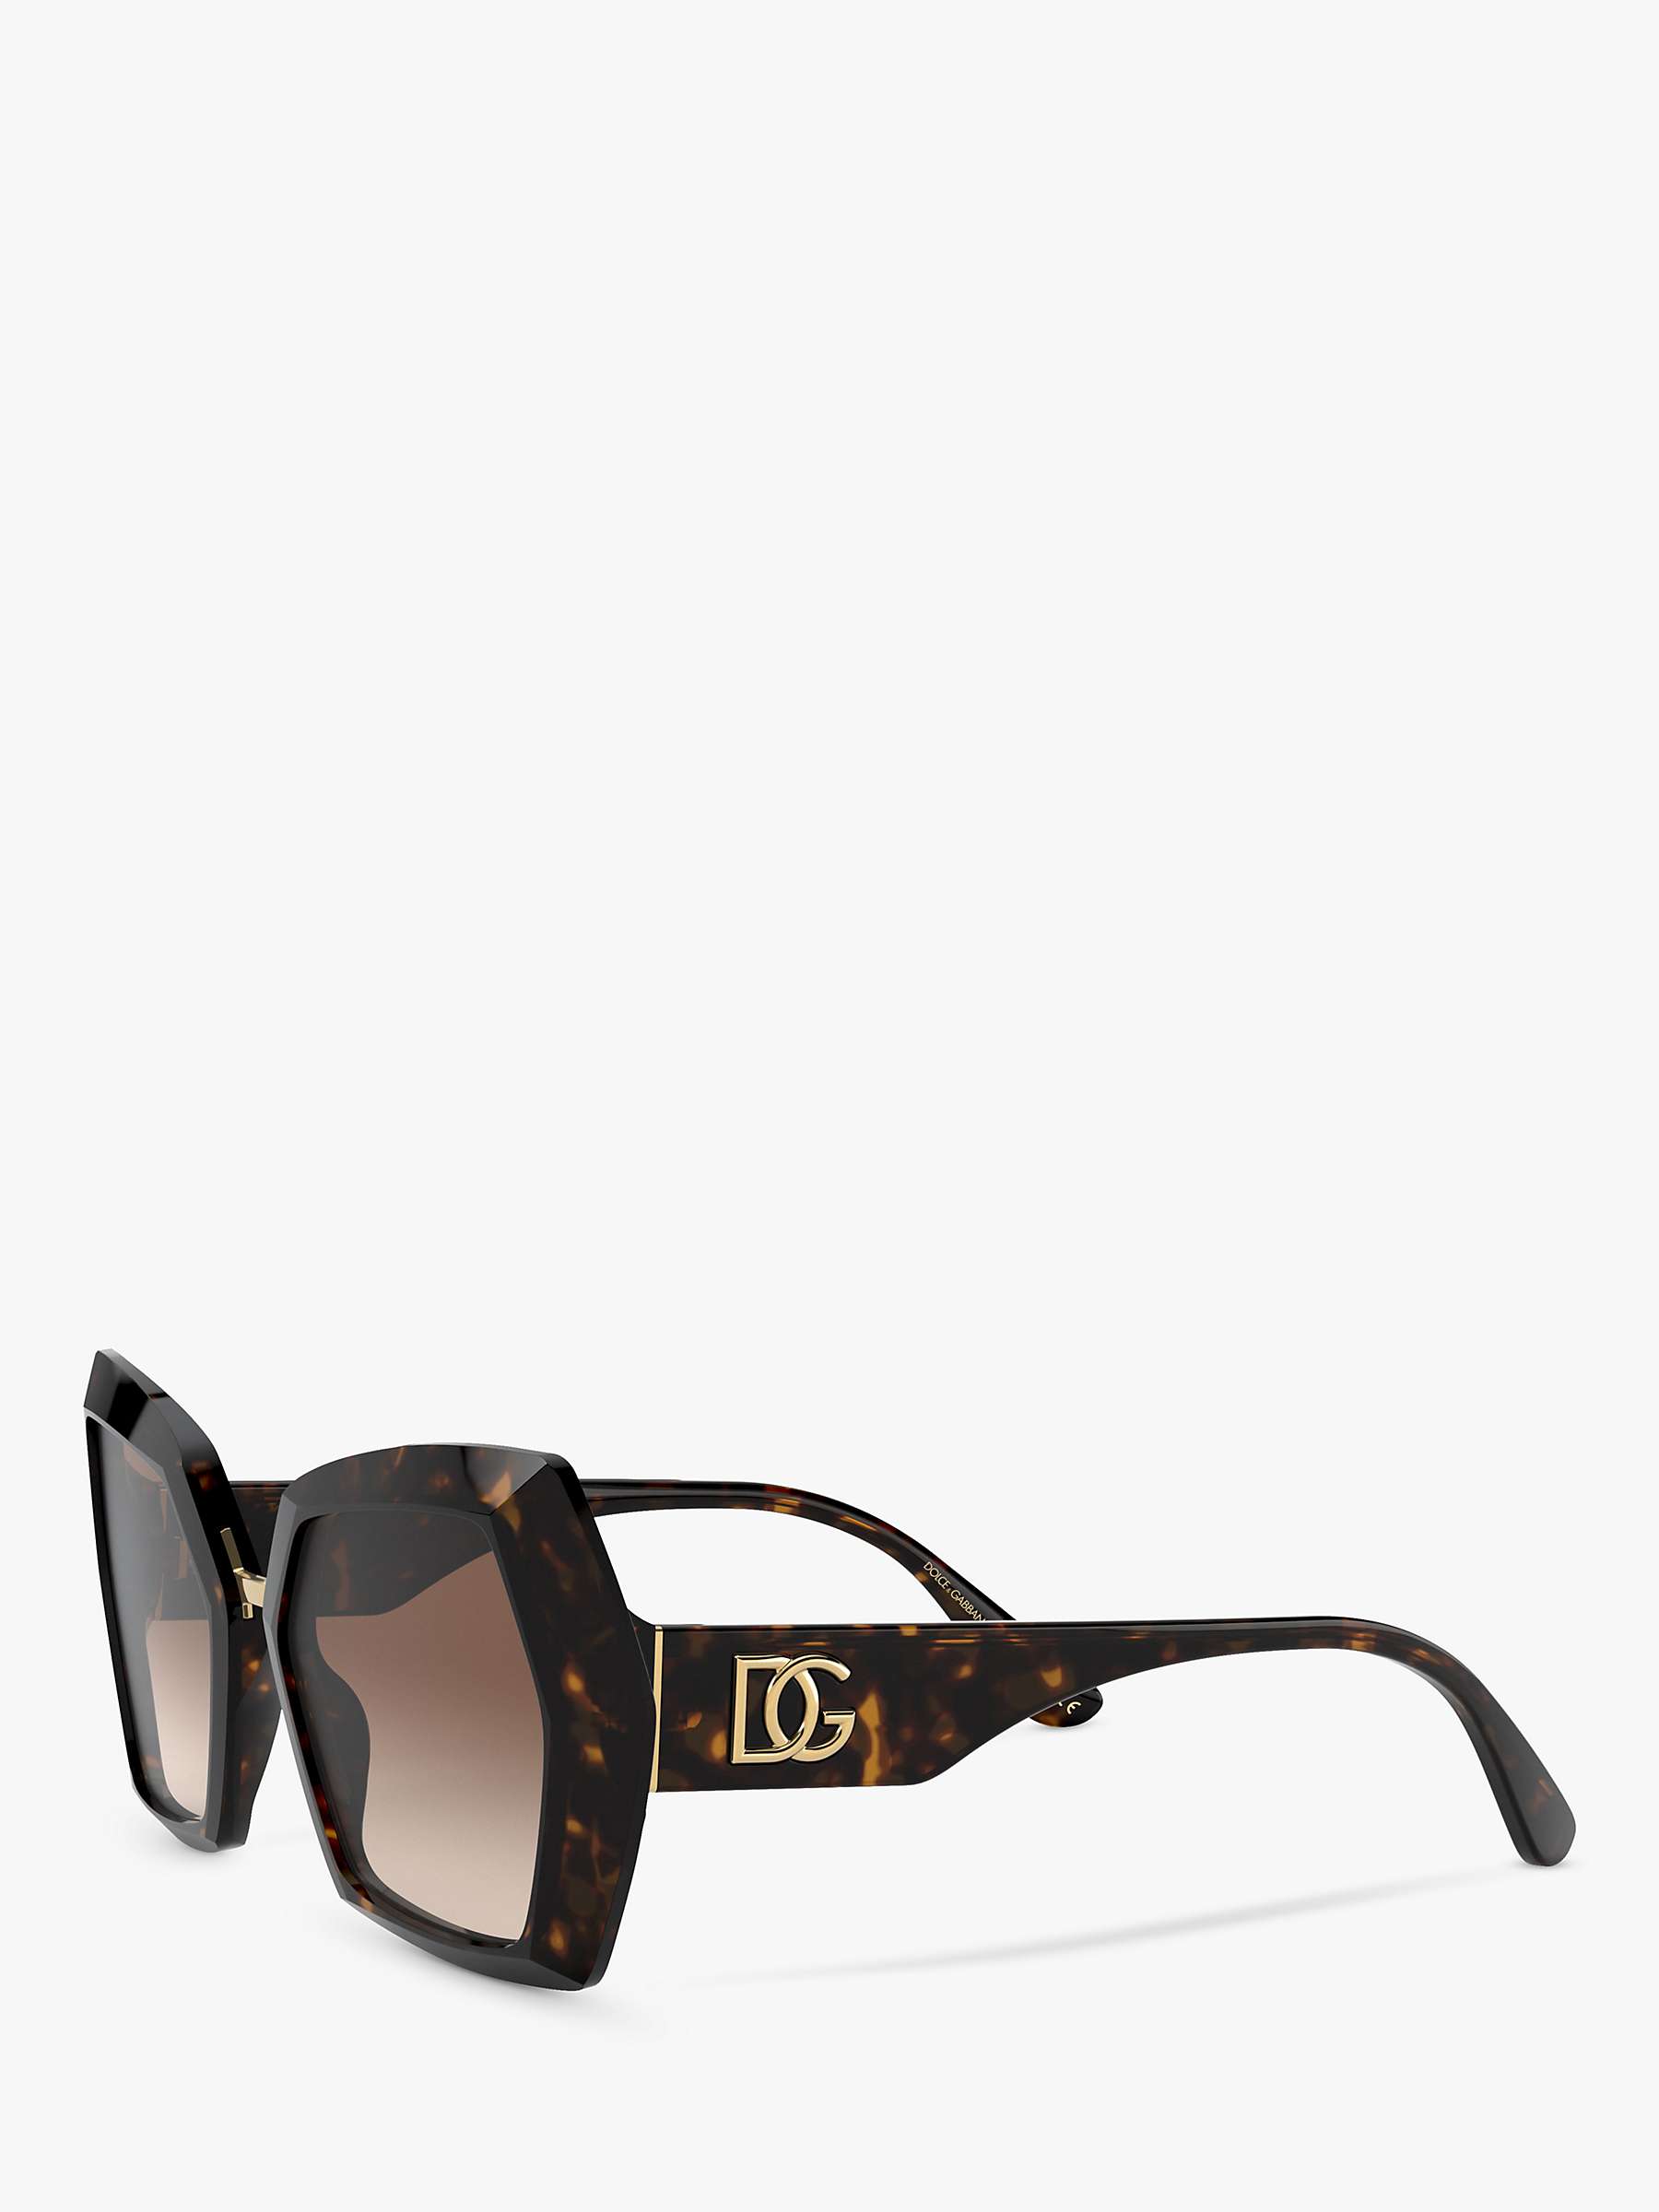 Buy Dolce & Gabbana DG4377 Women's Butterfly Sunglasses, Havana Online at johnlewis.com